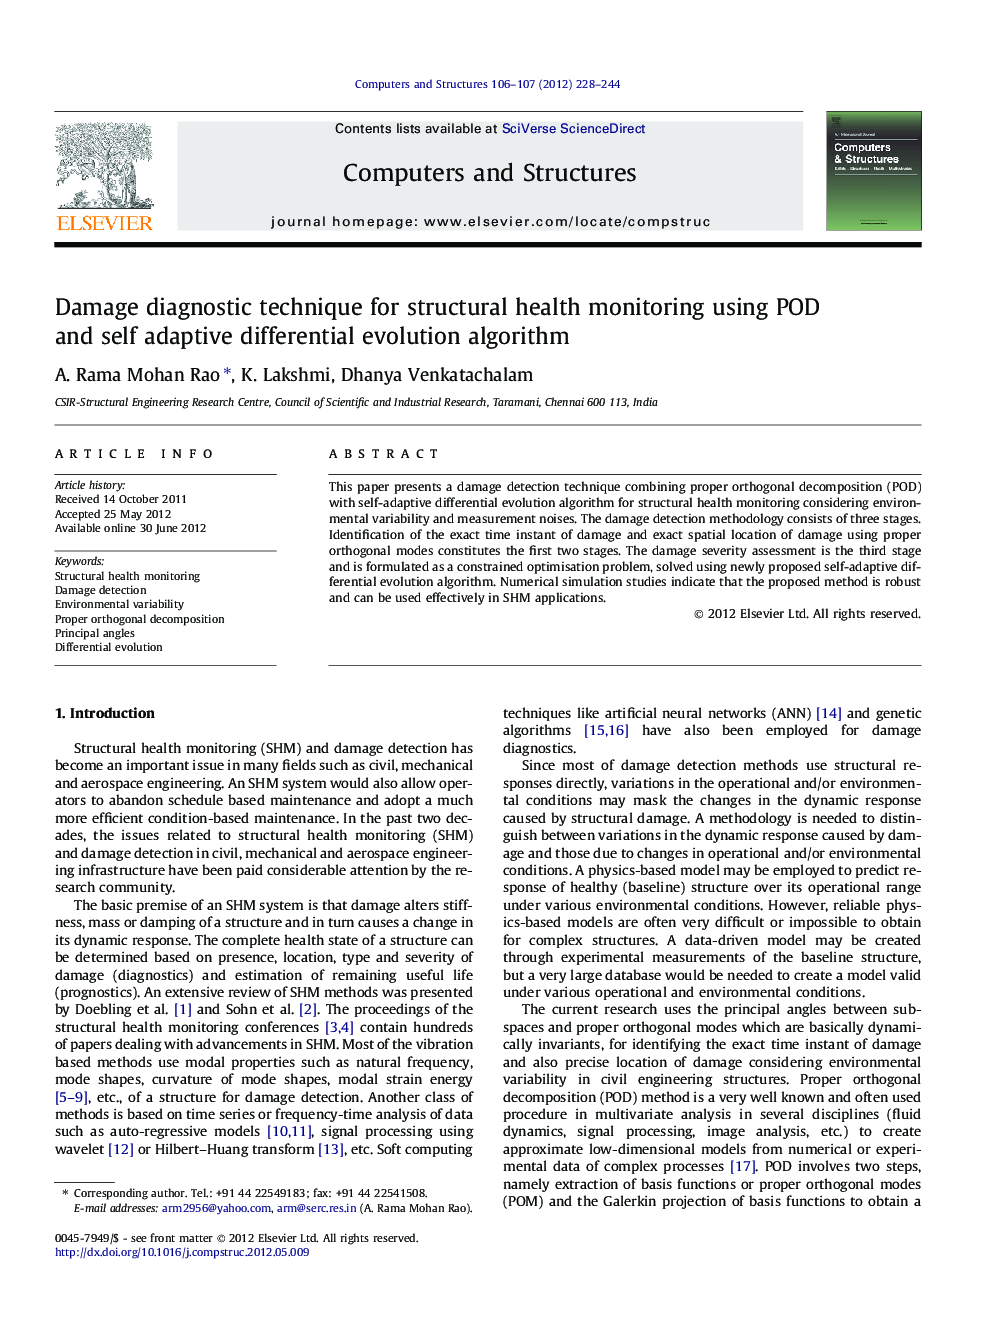 Damage diagnostic technique for structural health monitoring using POD and self adaptive differential evolution algorithm